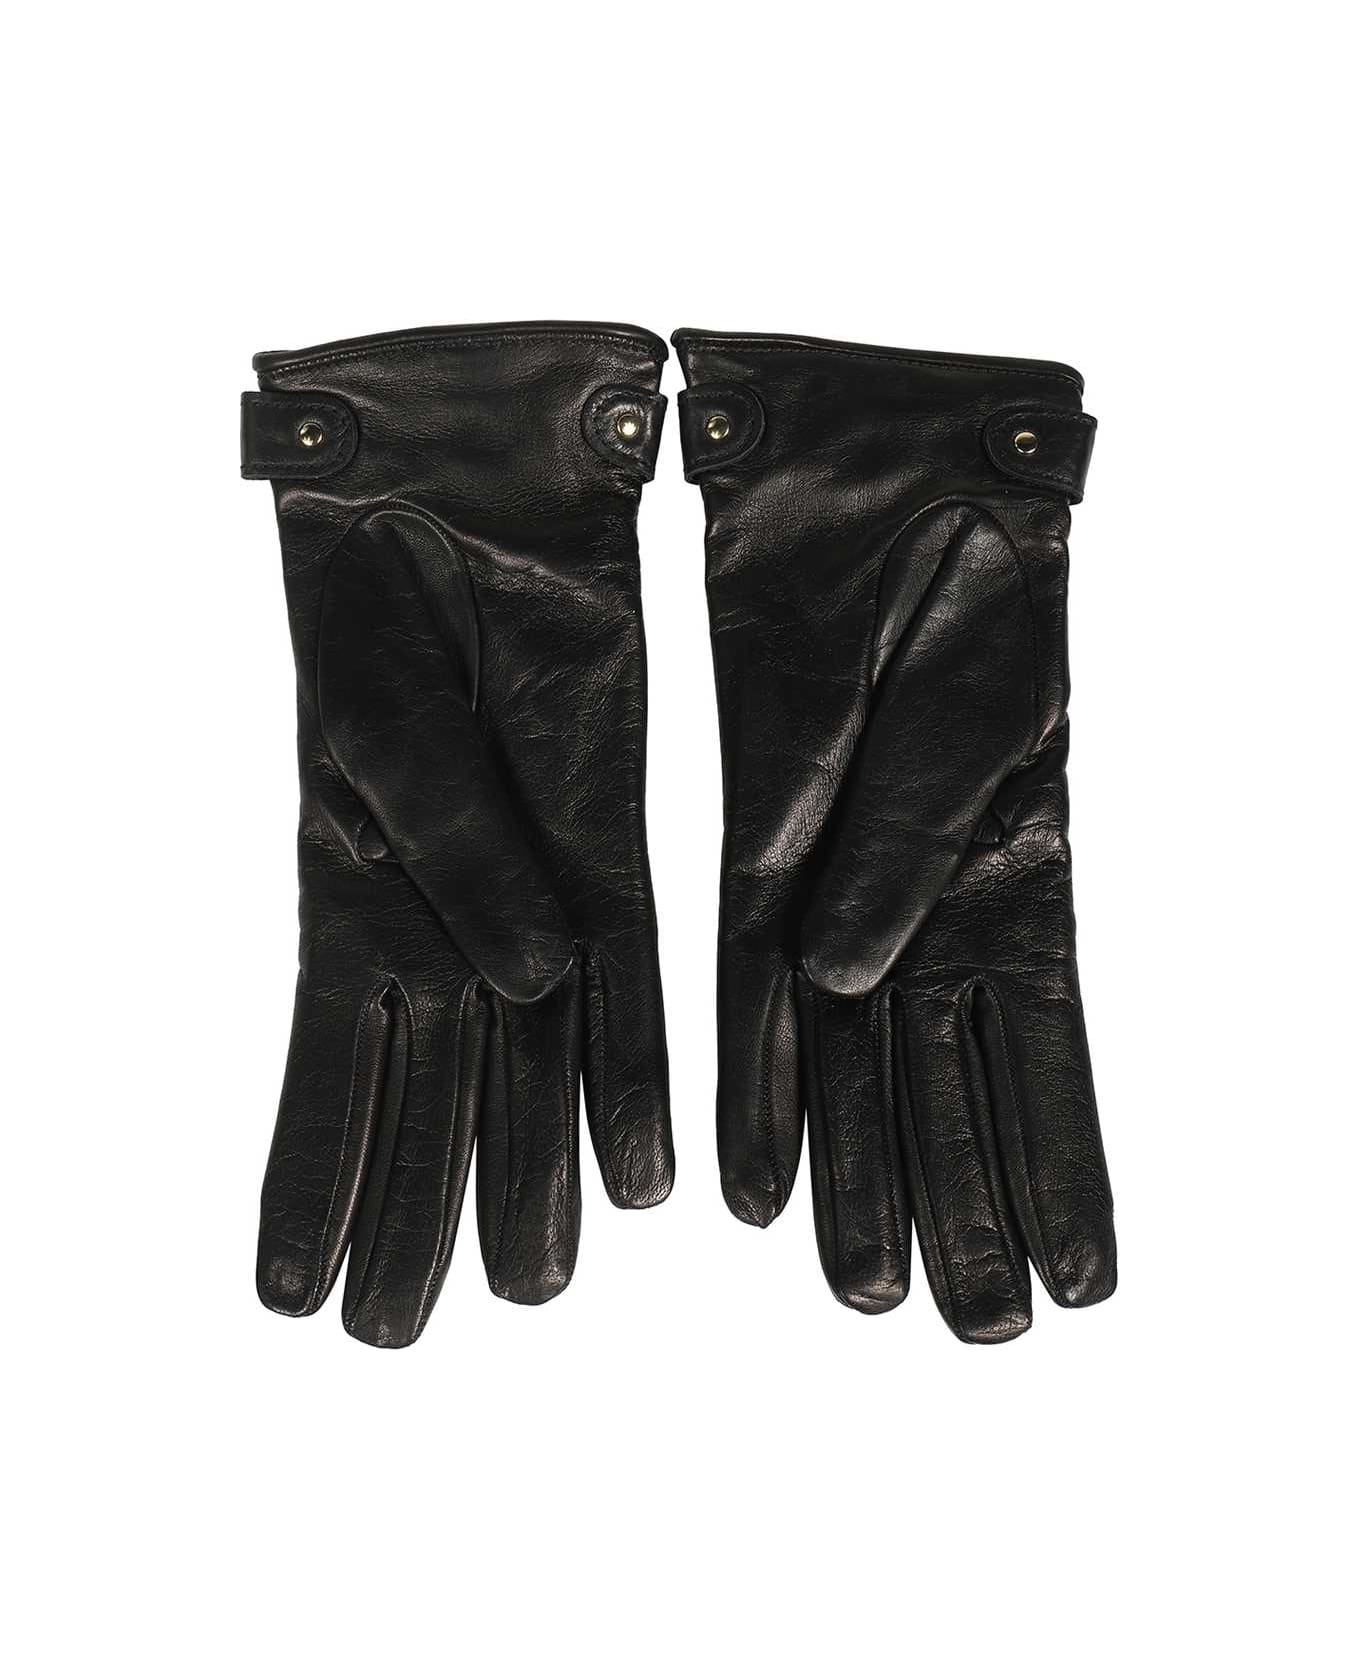 Moschino Leather Gloves - black 手袋